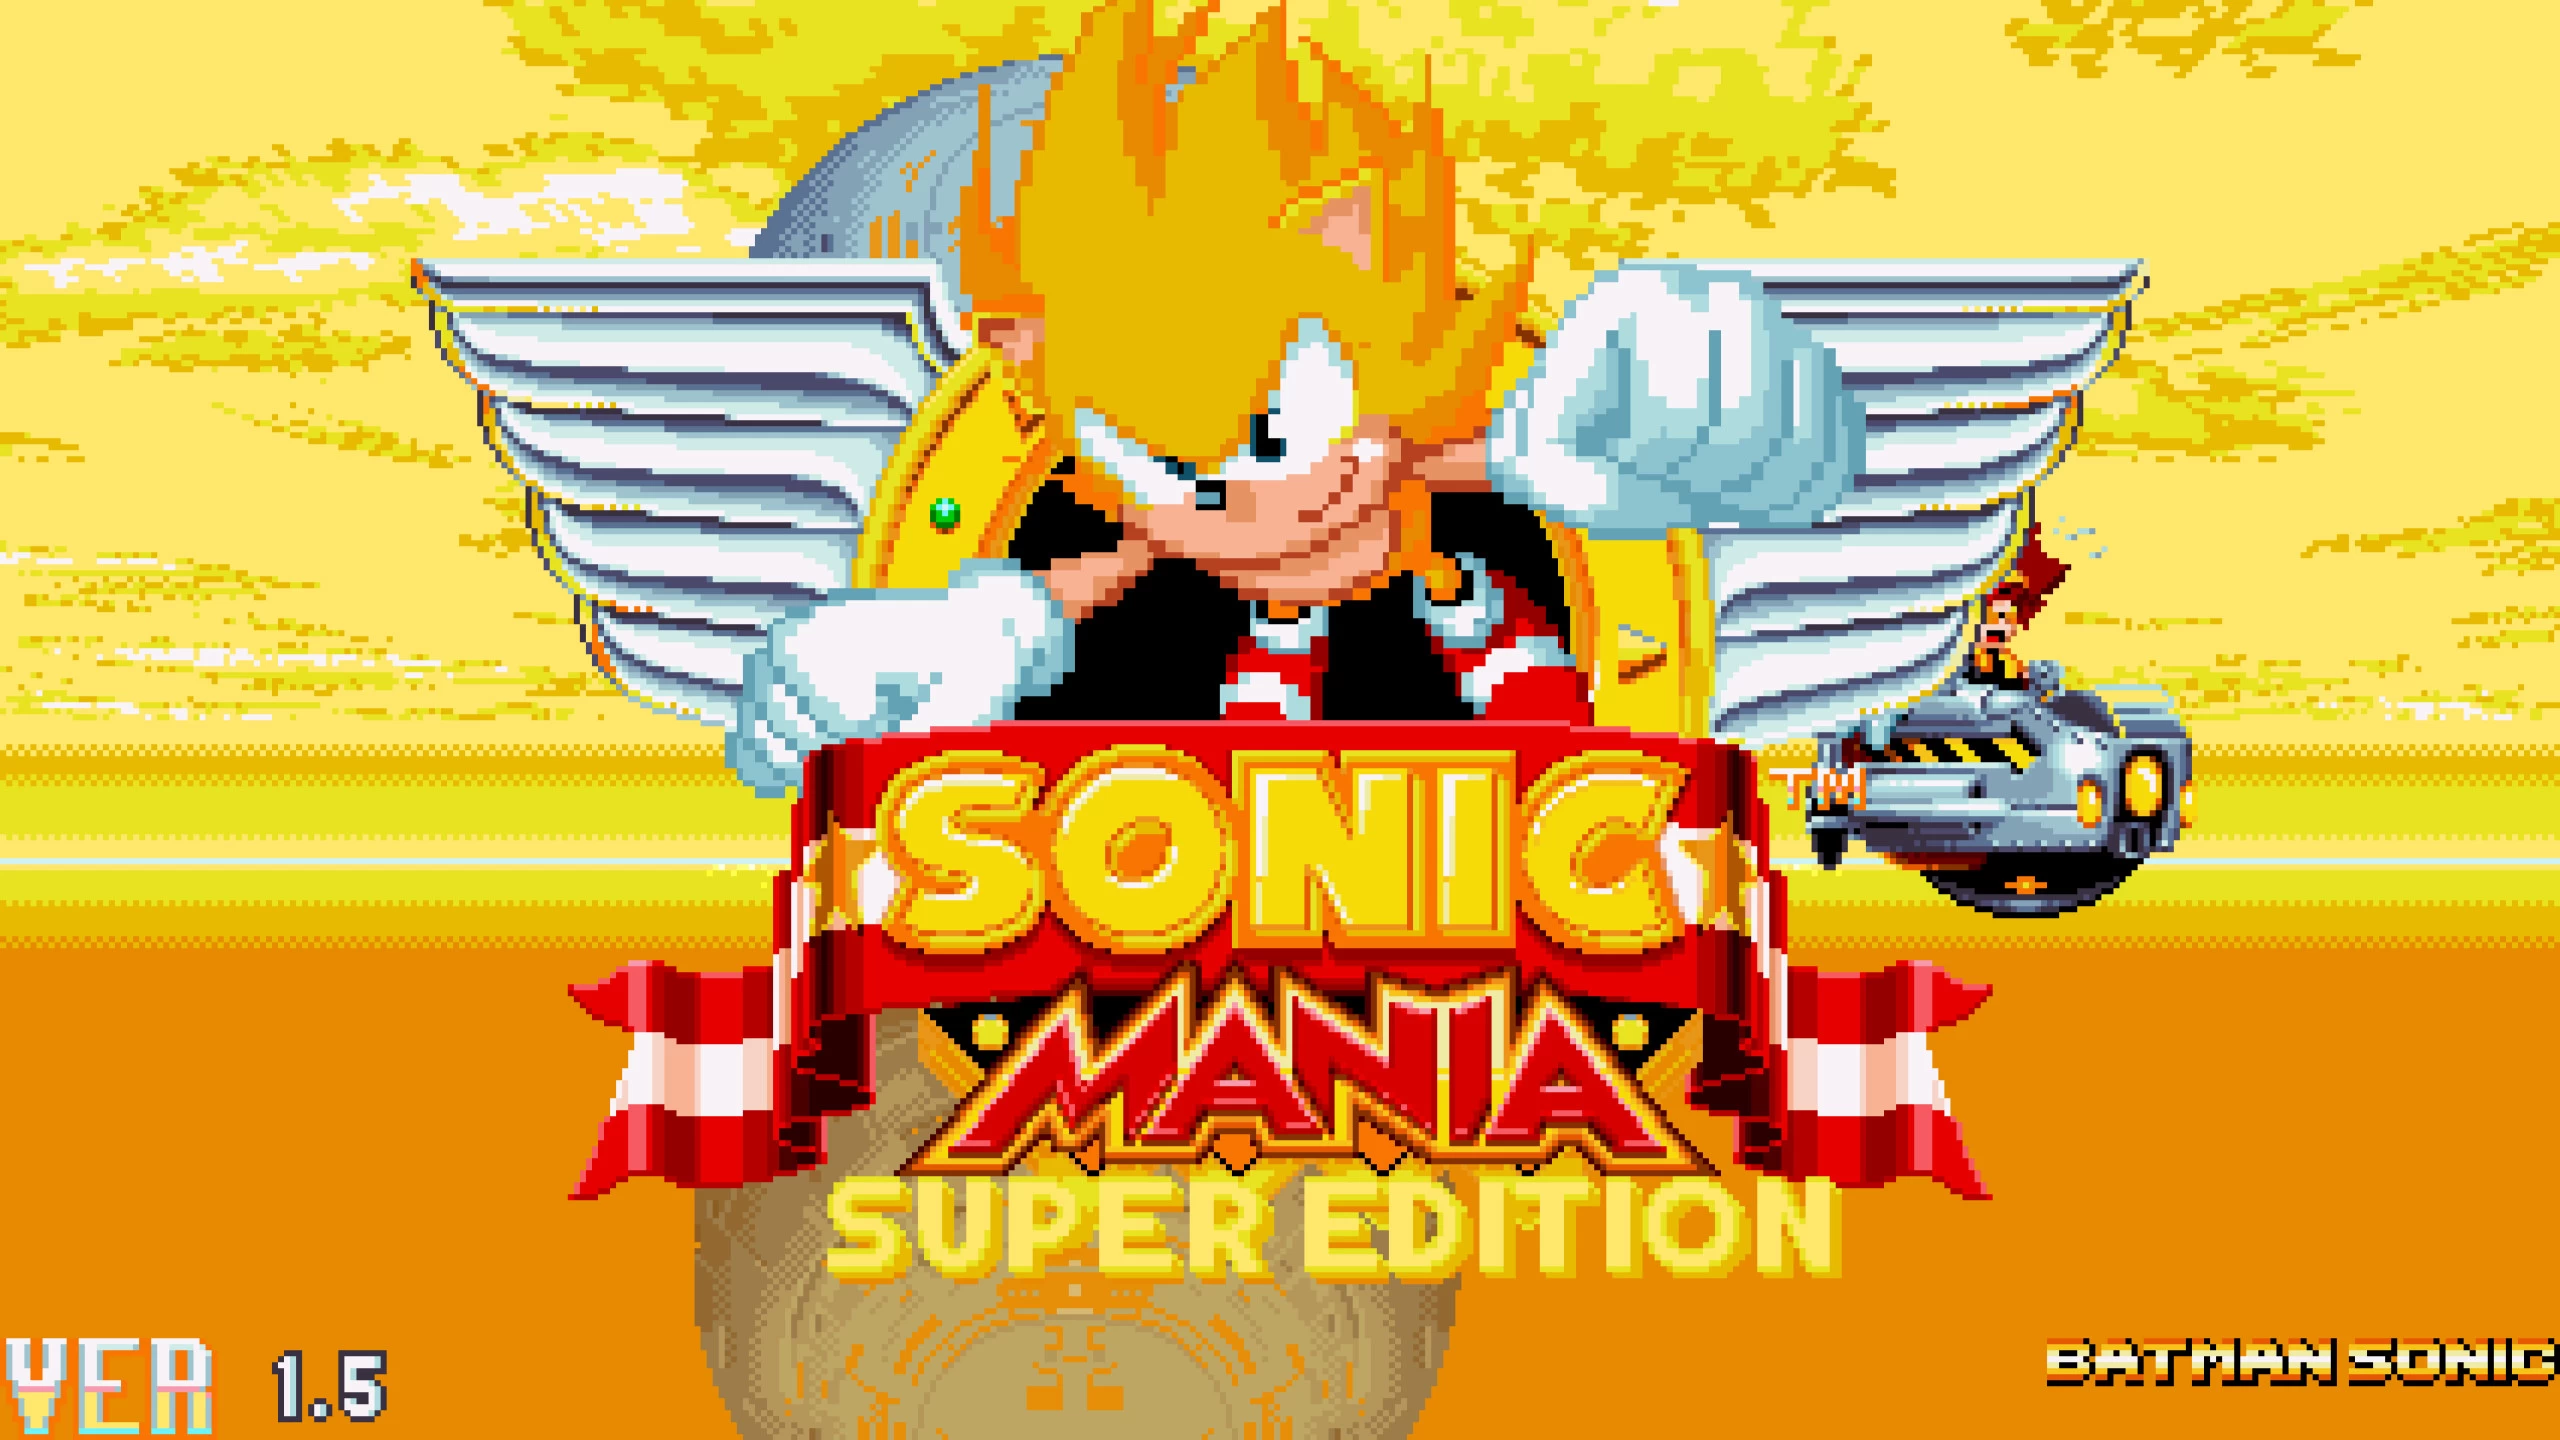 Download Sonic Mania Plus APK for free on Mediafire - Mediafire